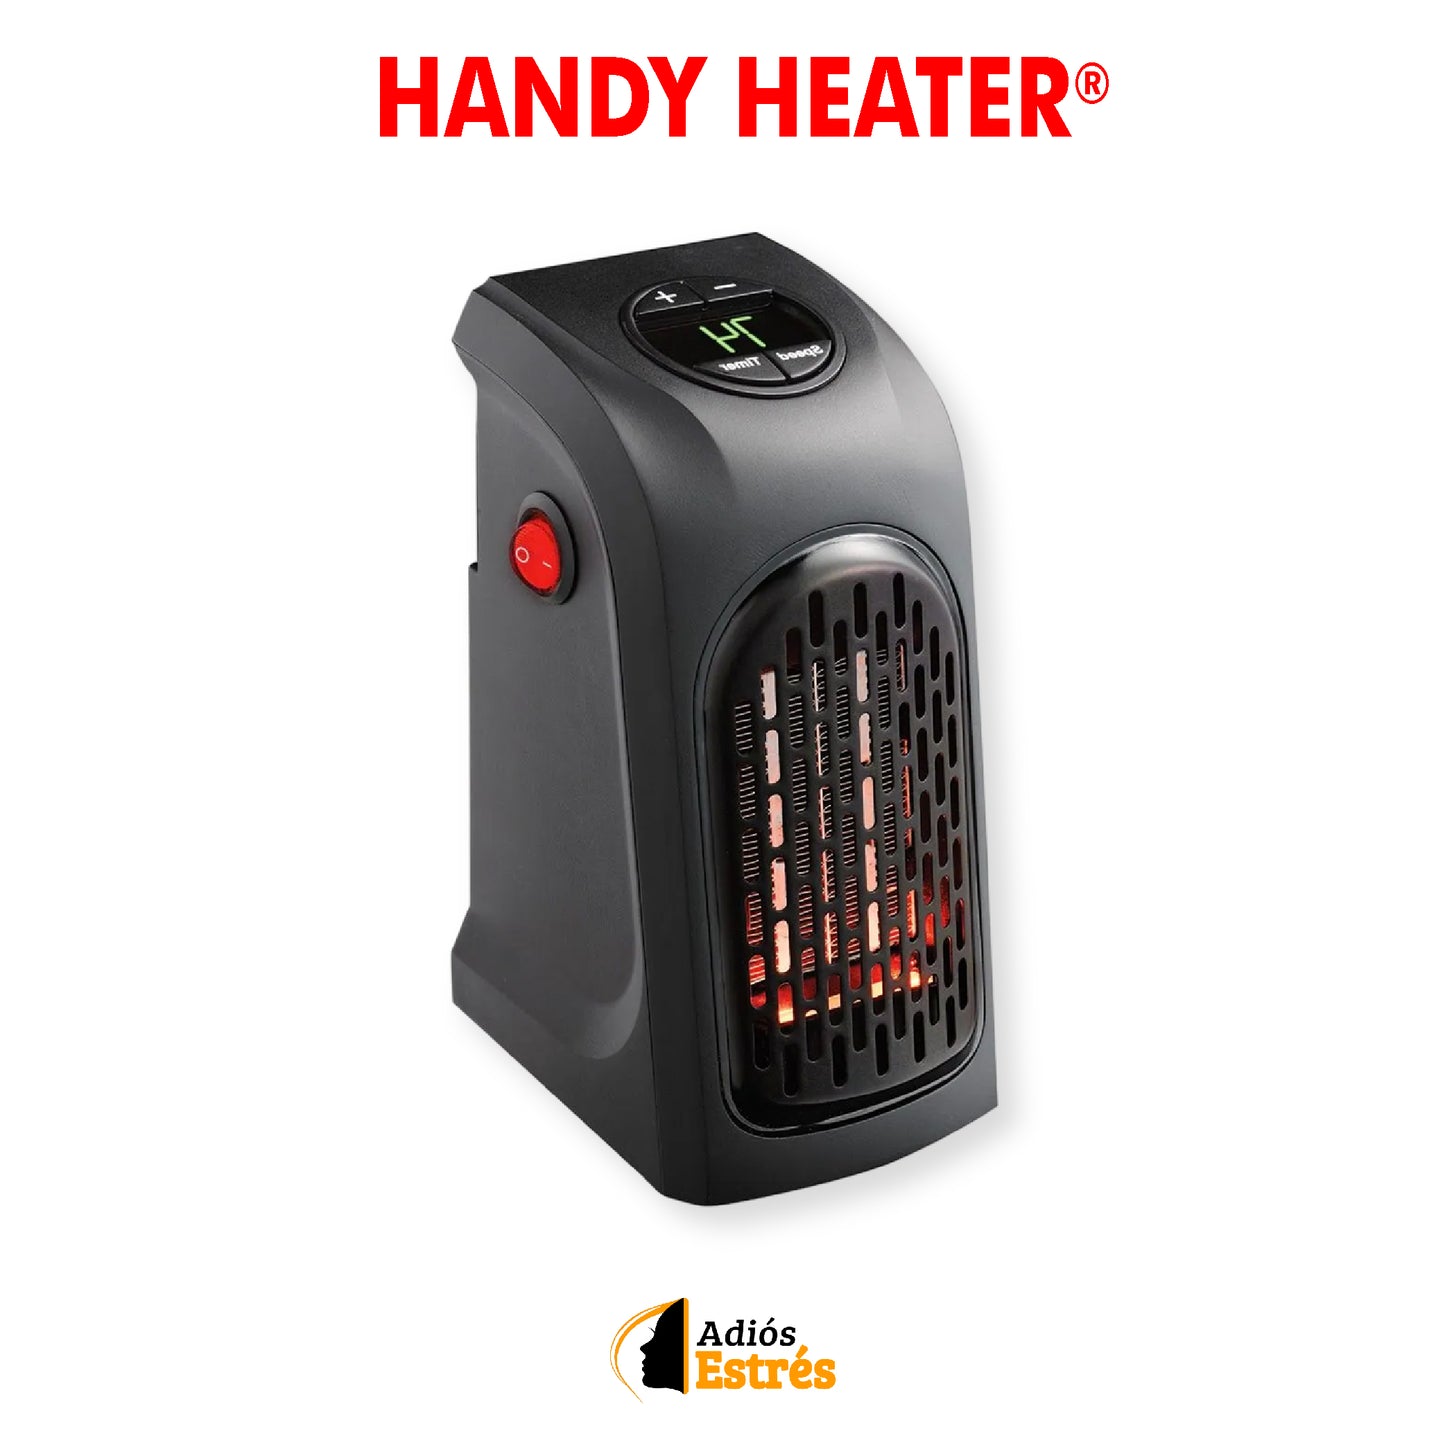 Handy Heater®